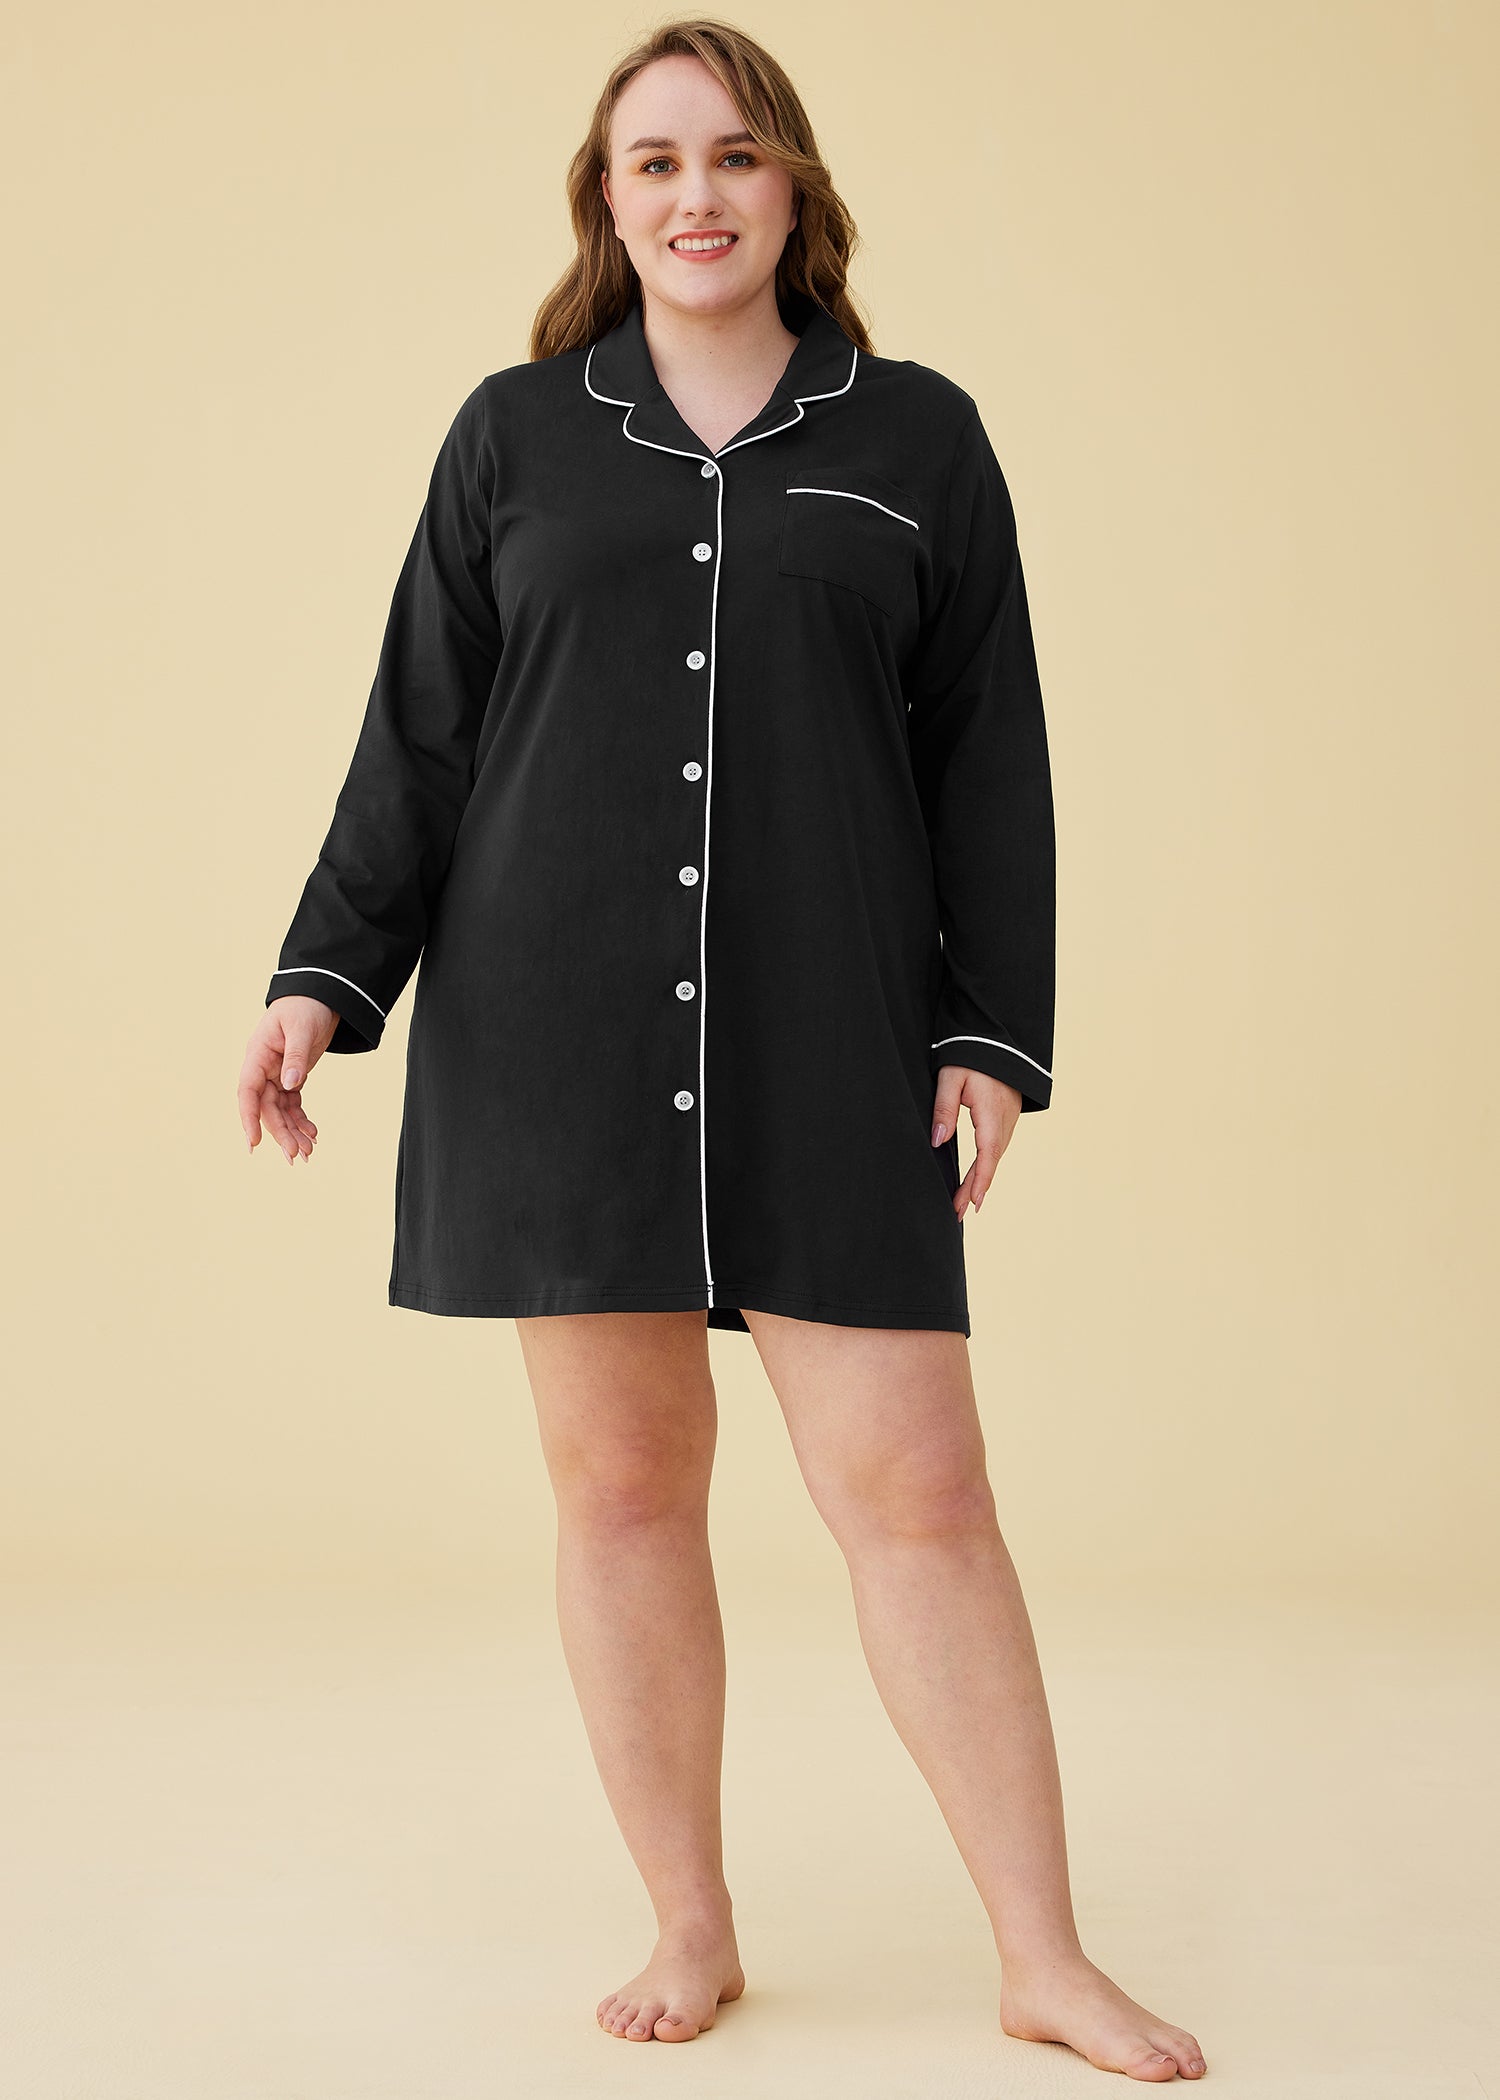 Women's Cotton Nightshirt Button Up Long Sleeves Sleep Shirt – Latuza